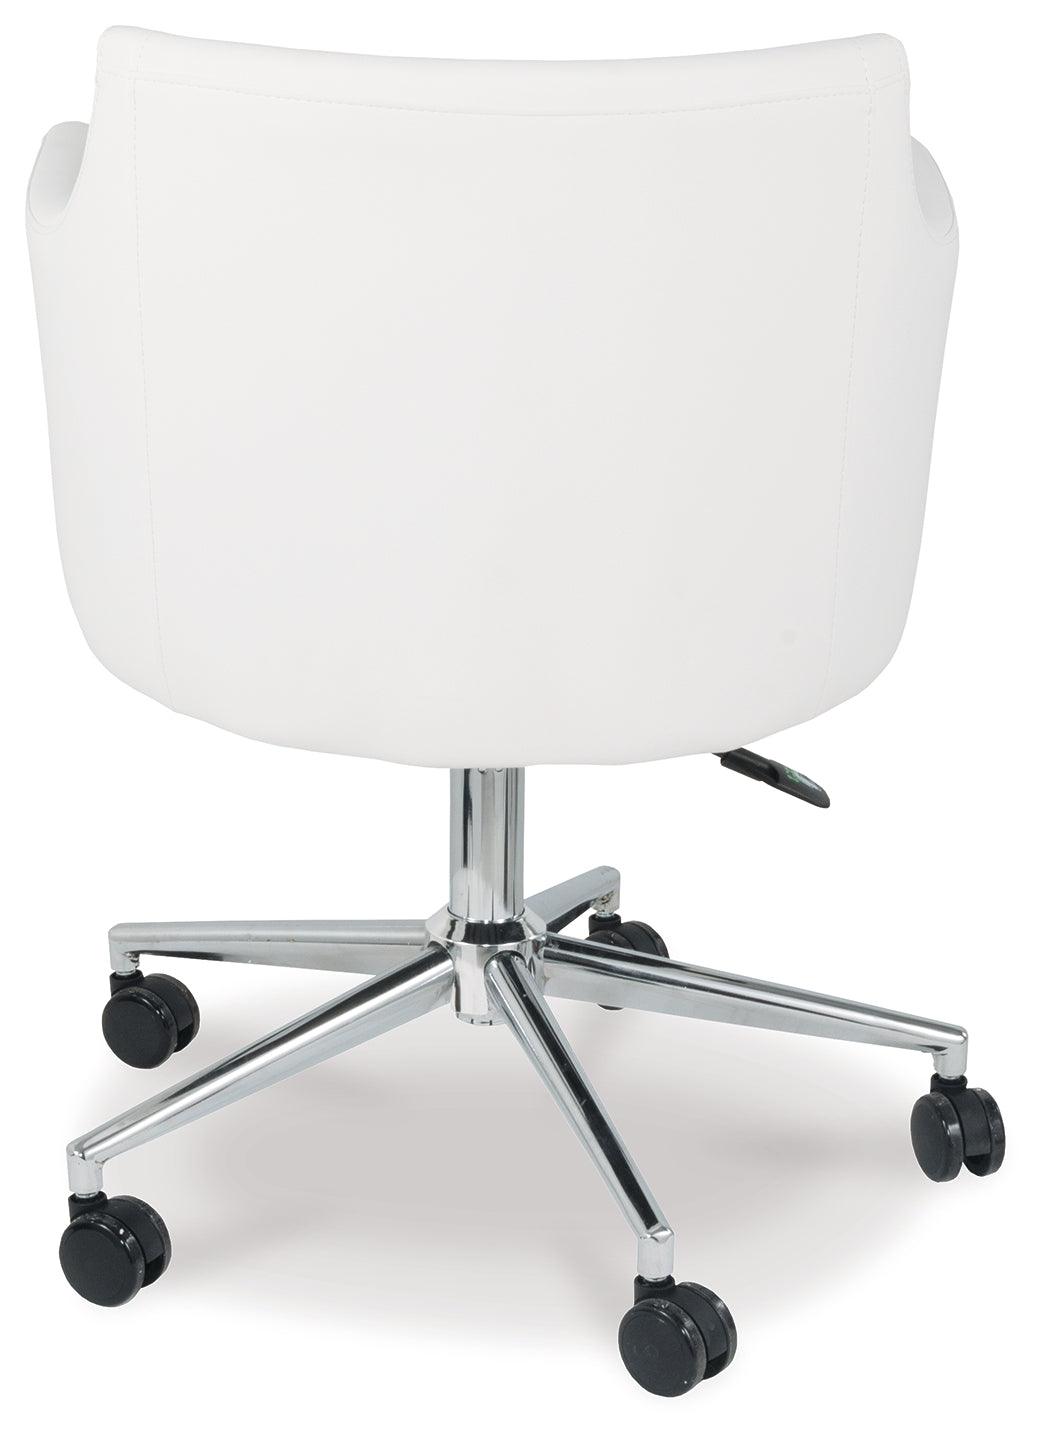 Baraga White Home Office Desk Chair - Ella Furniture